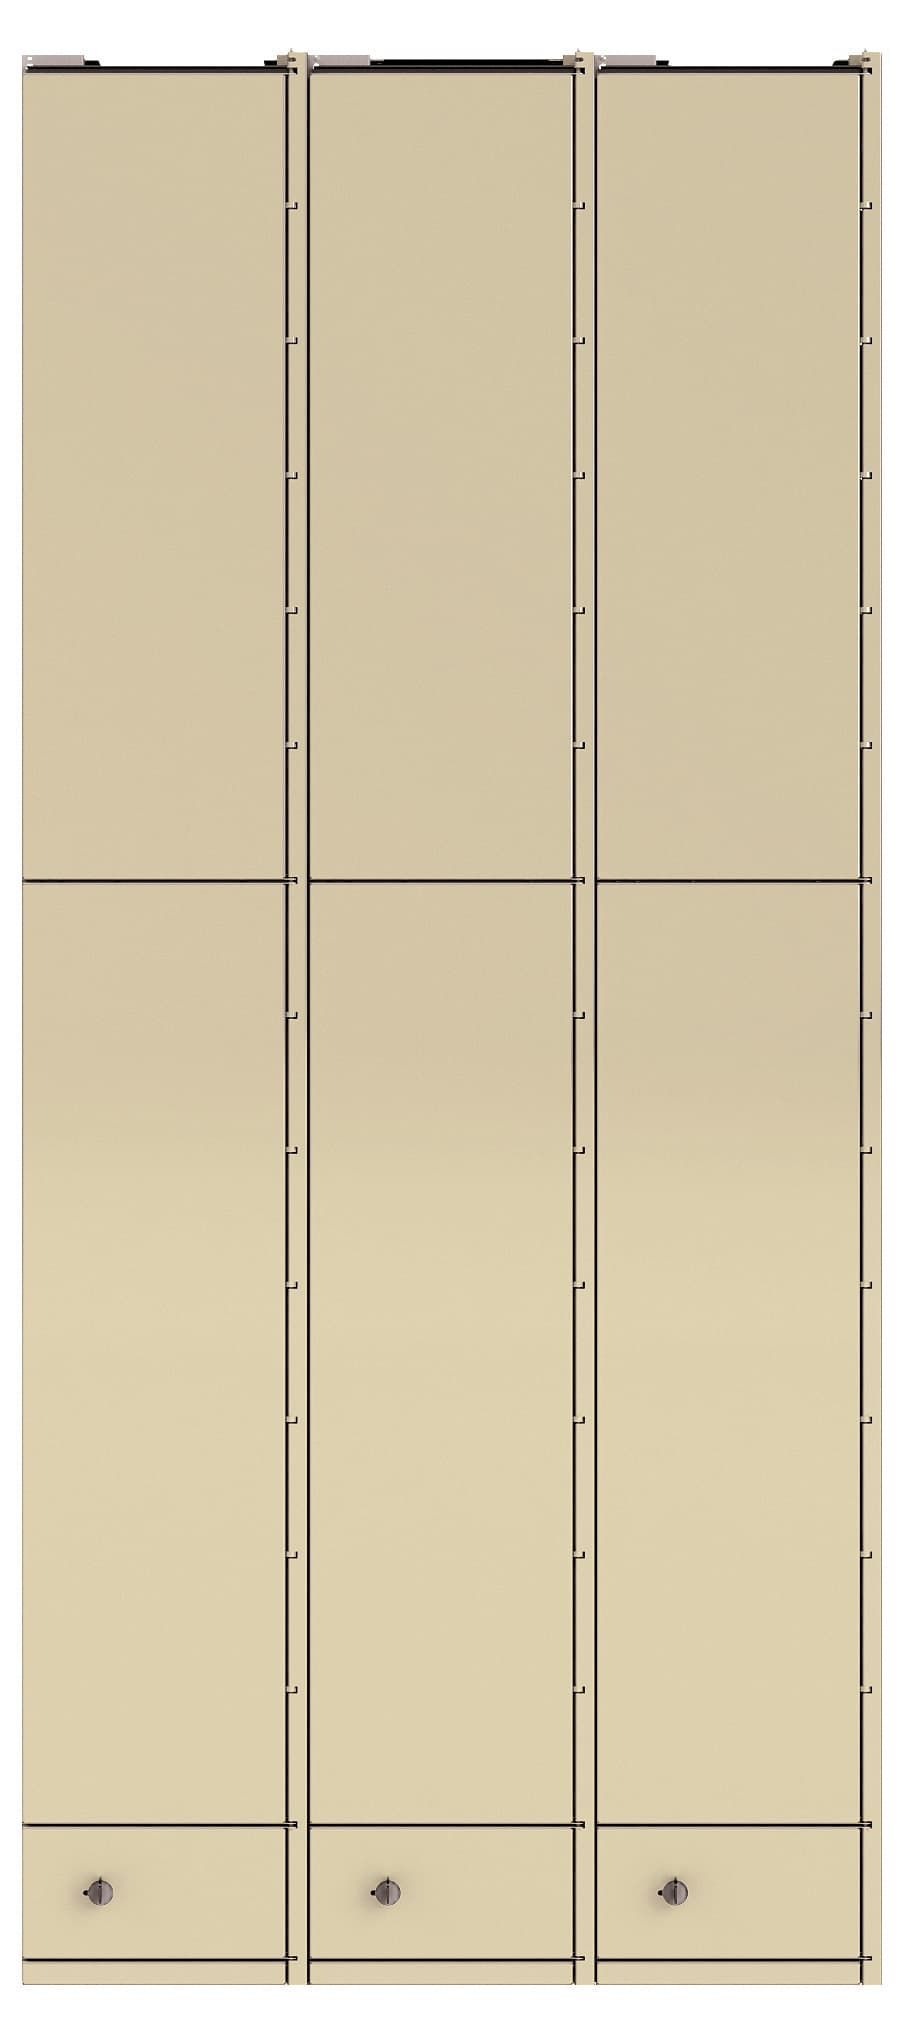 three column dry cleaning locker module